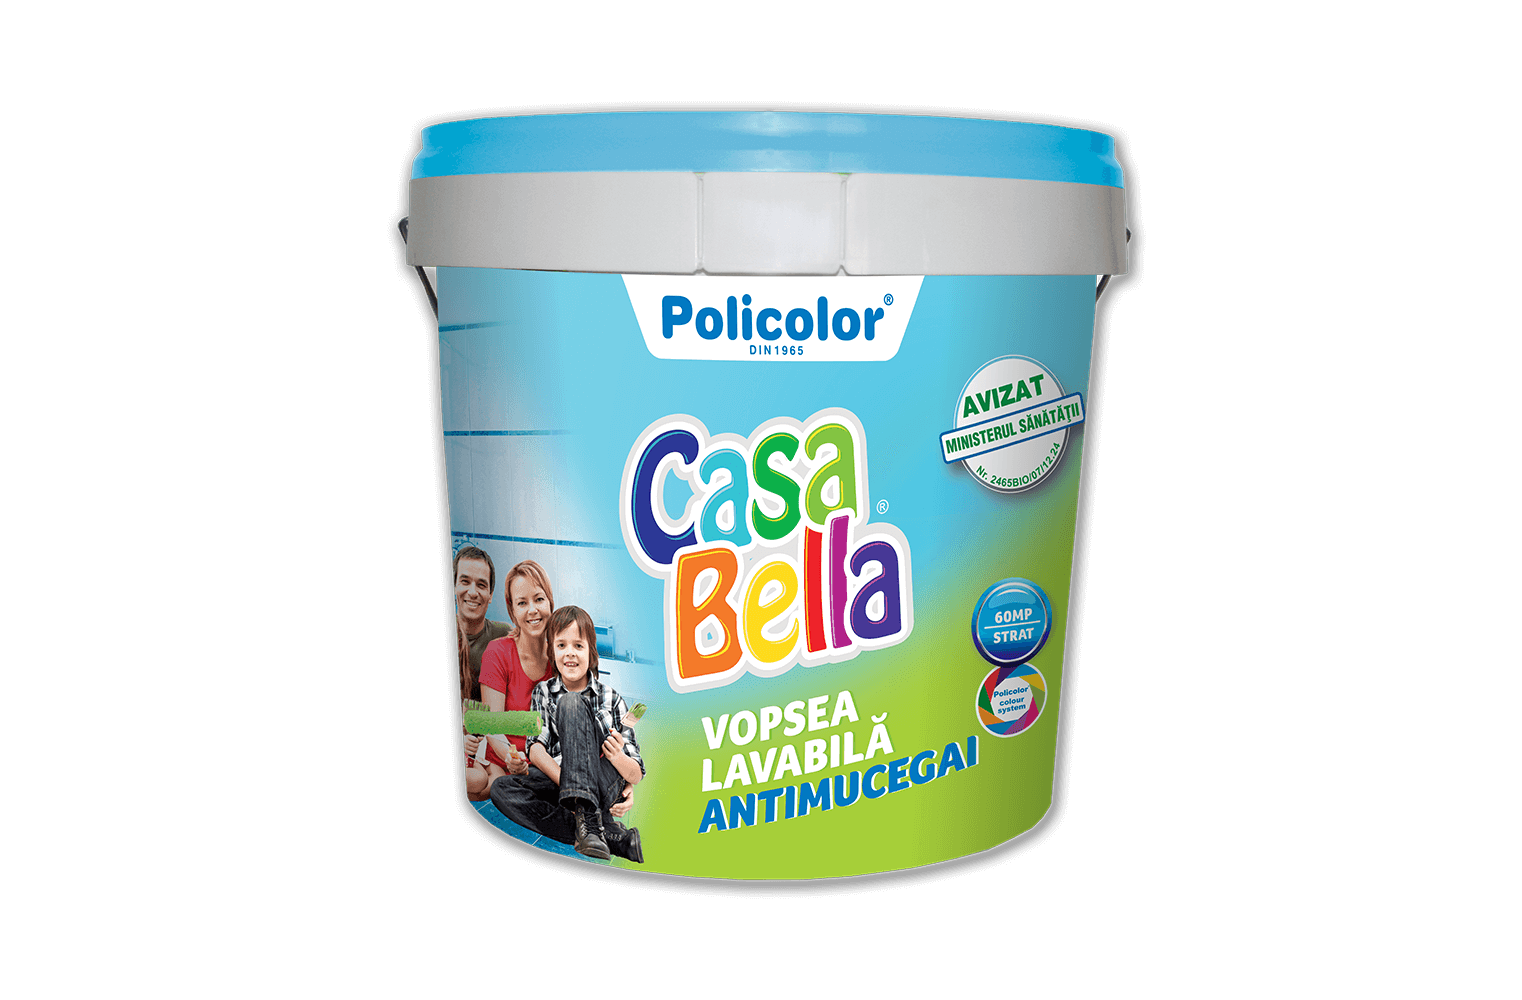 CasaBella Brand